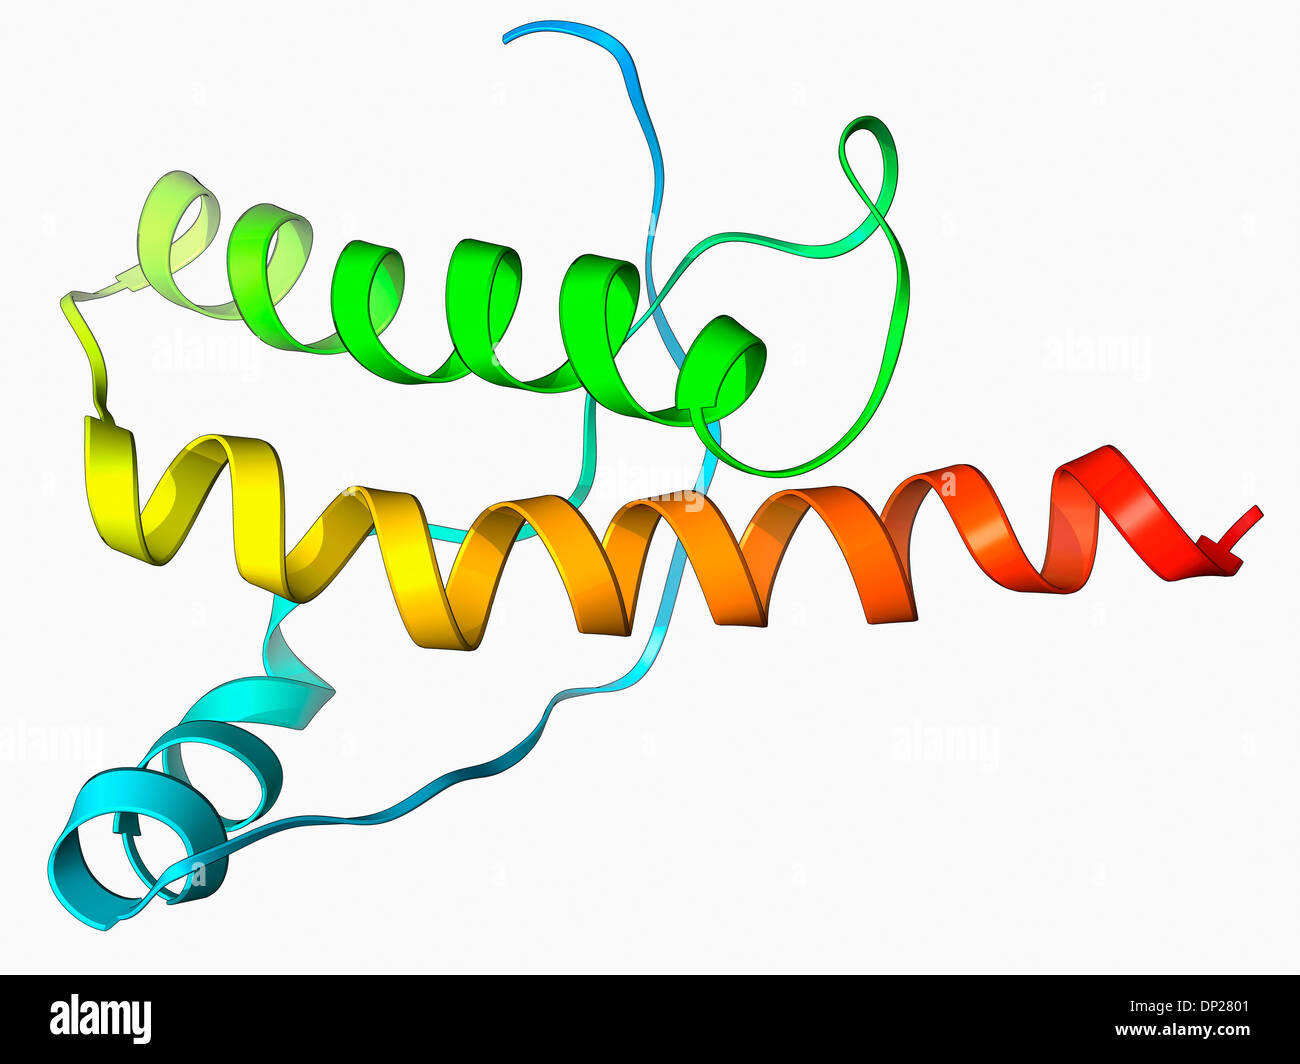 Prione umano proteina precursore Foto Stock